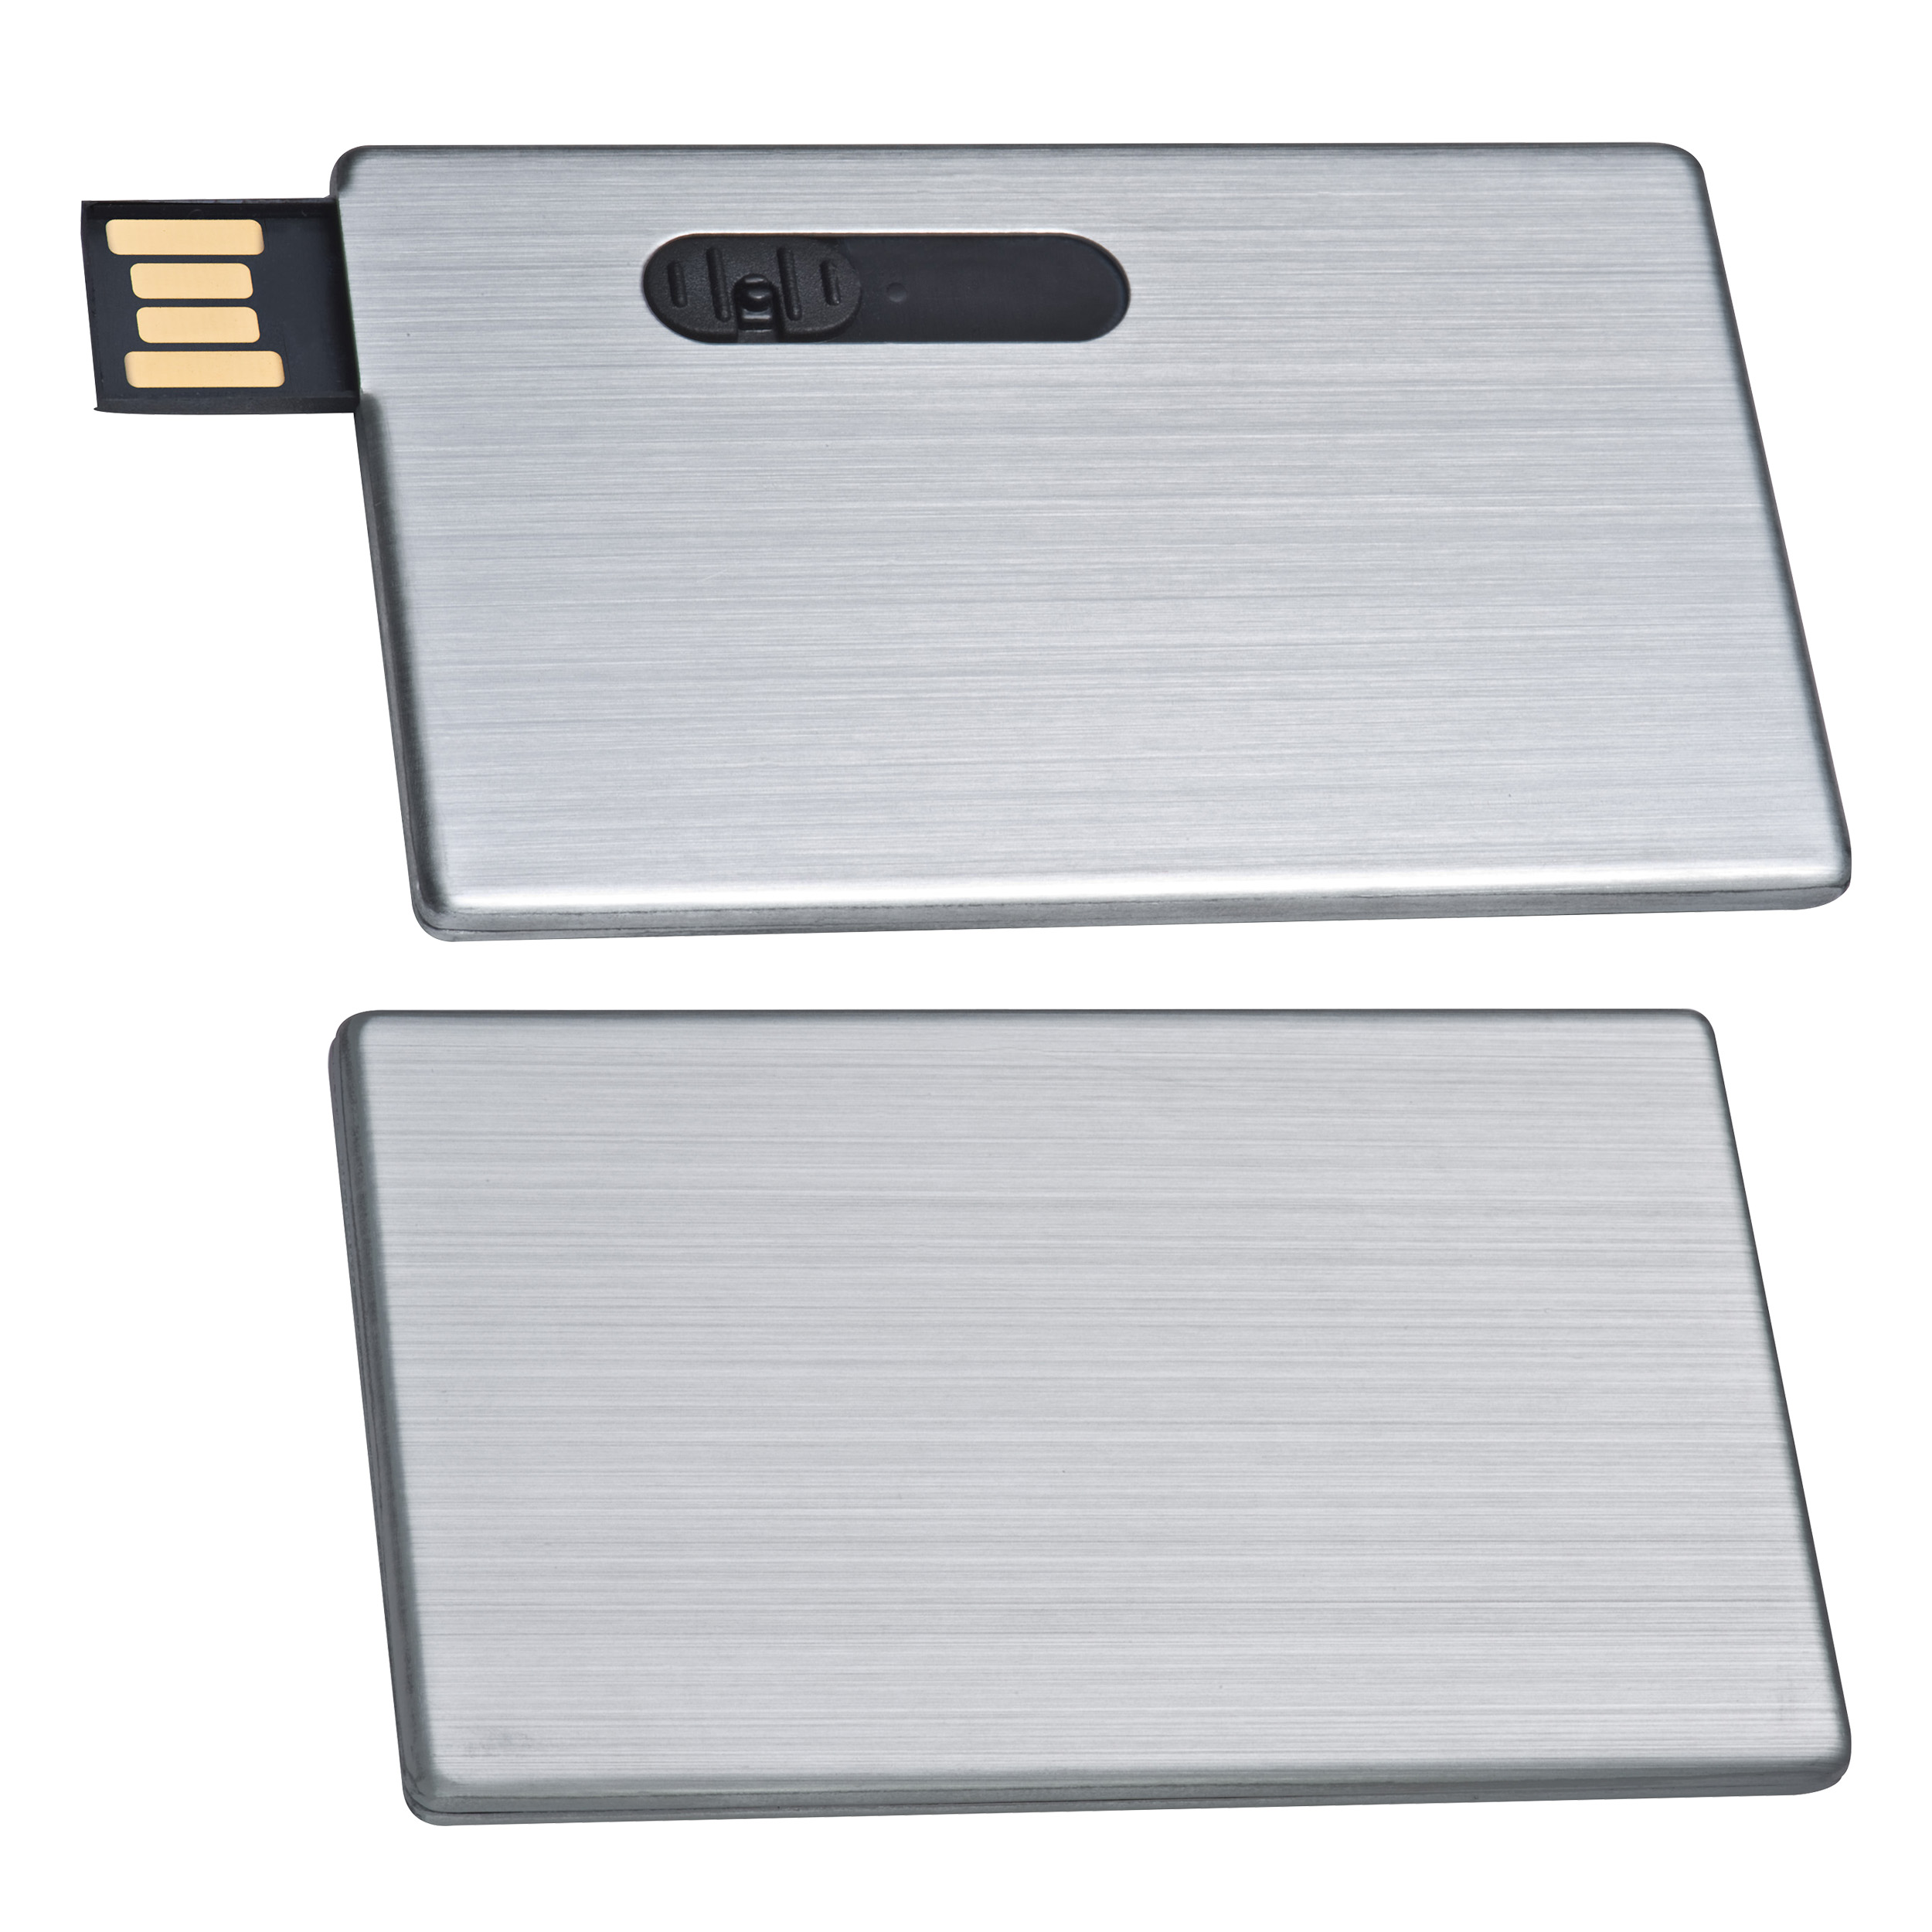 USB-Stick Modell 12 